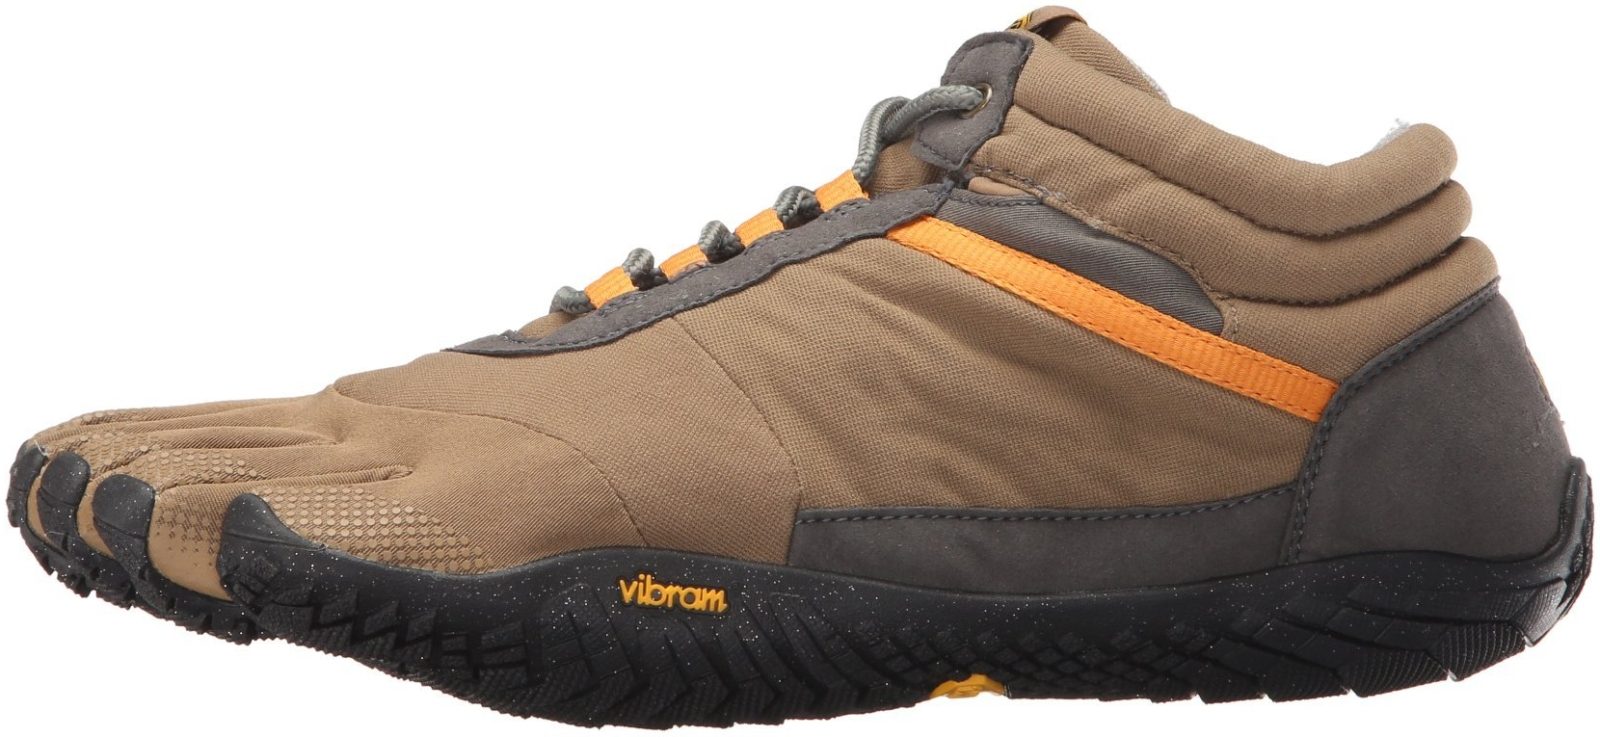 Vibram Mens Trek Ascent Insulated Walking Shoe 